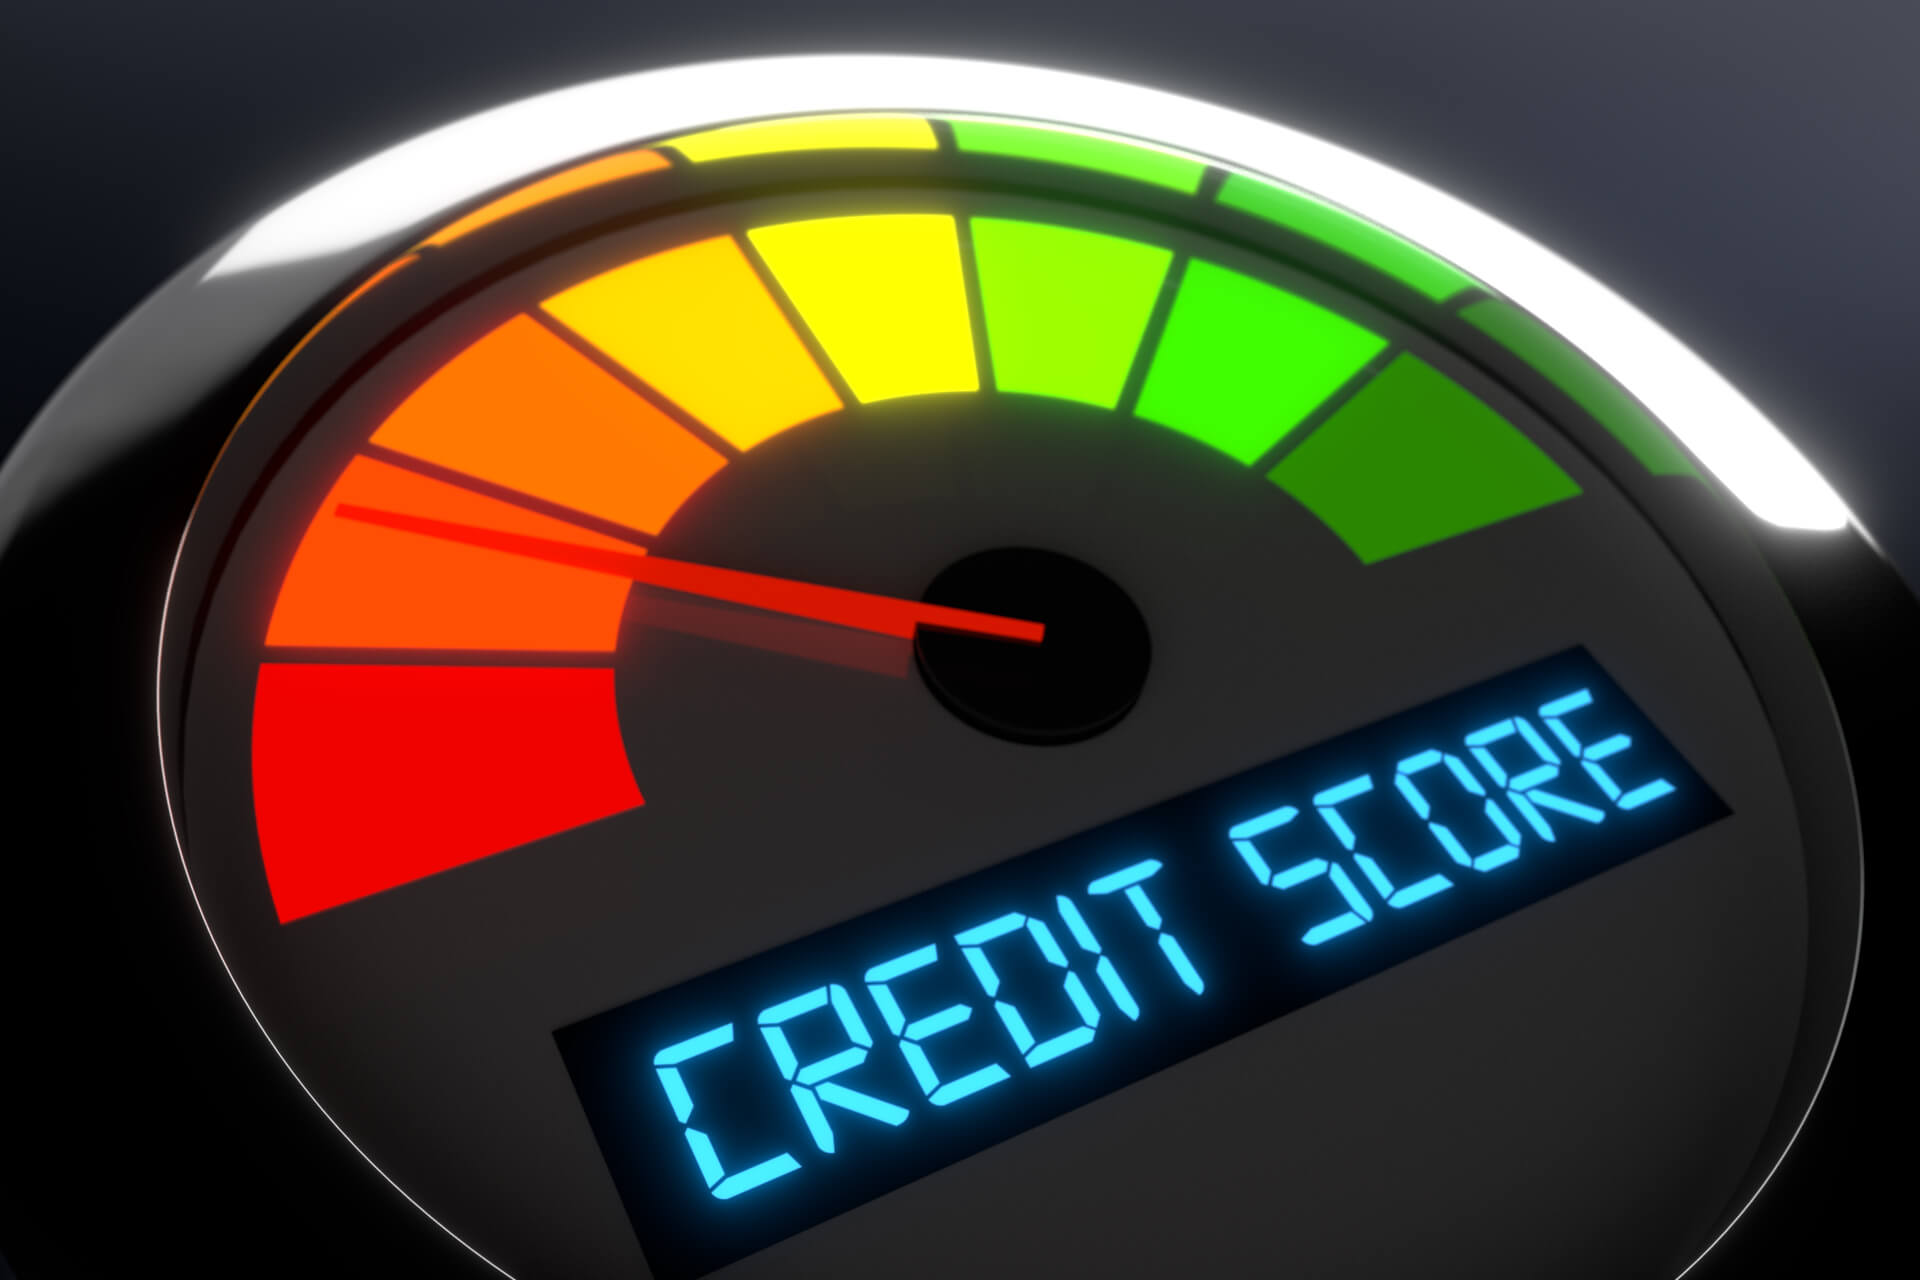 Chrome gauge showing poor credit score free image download